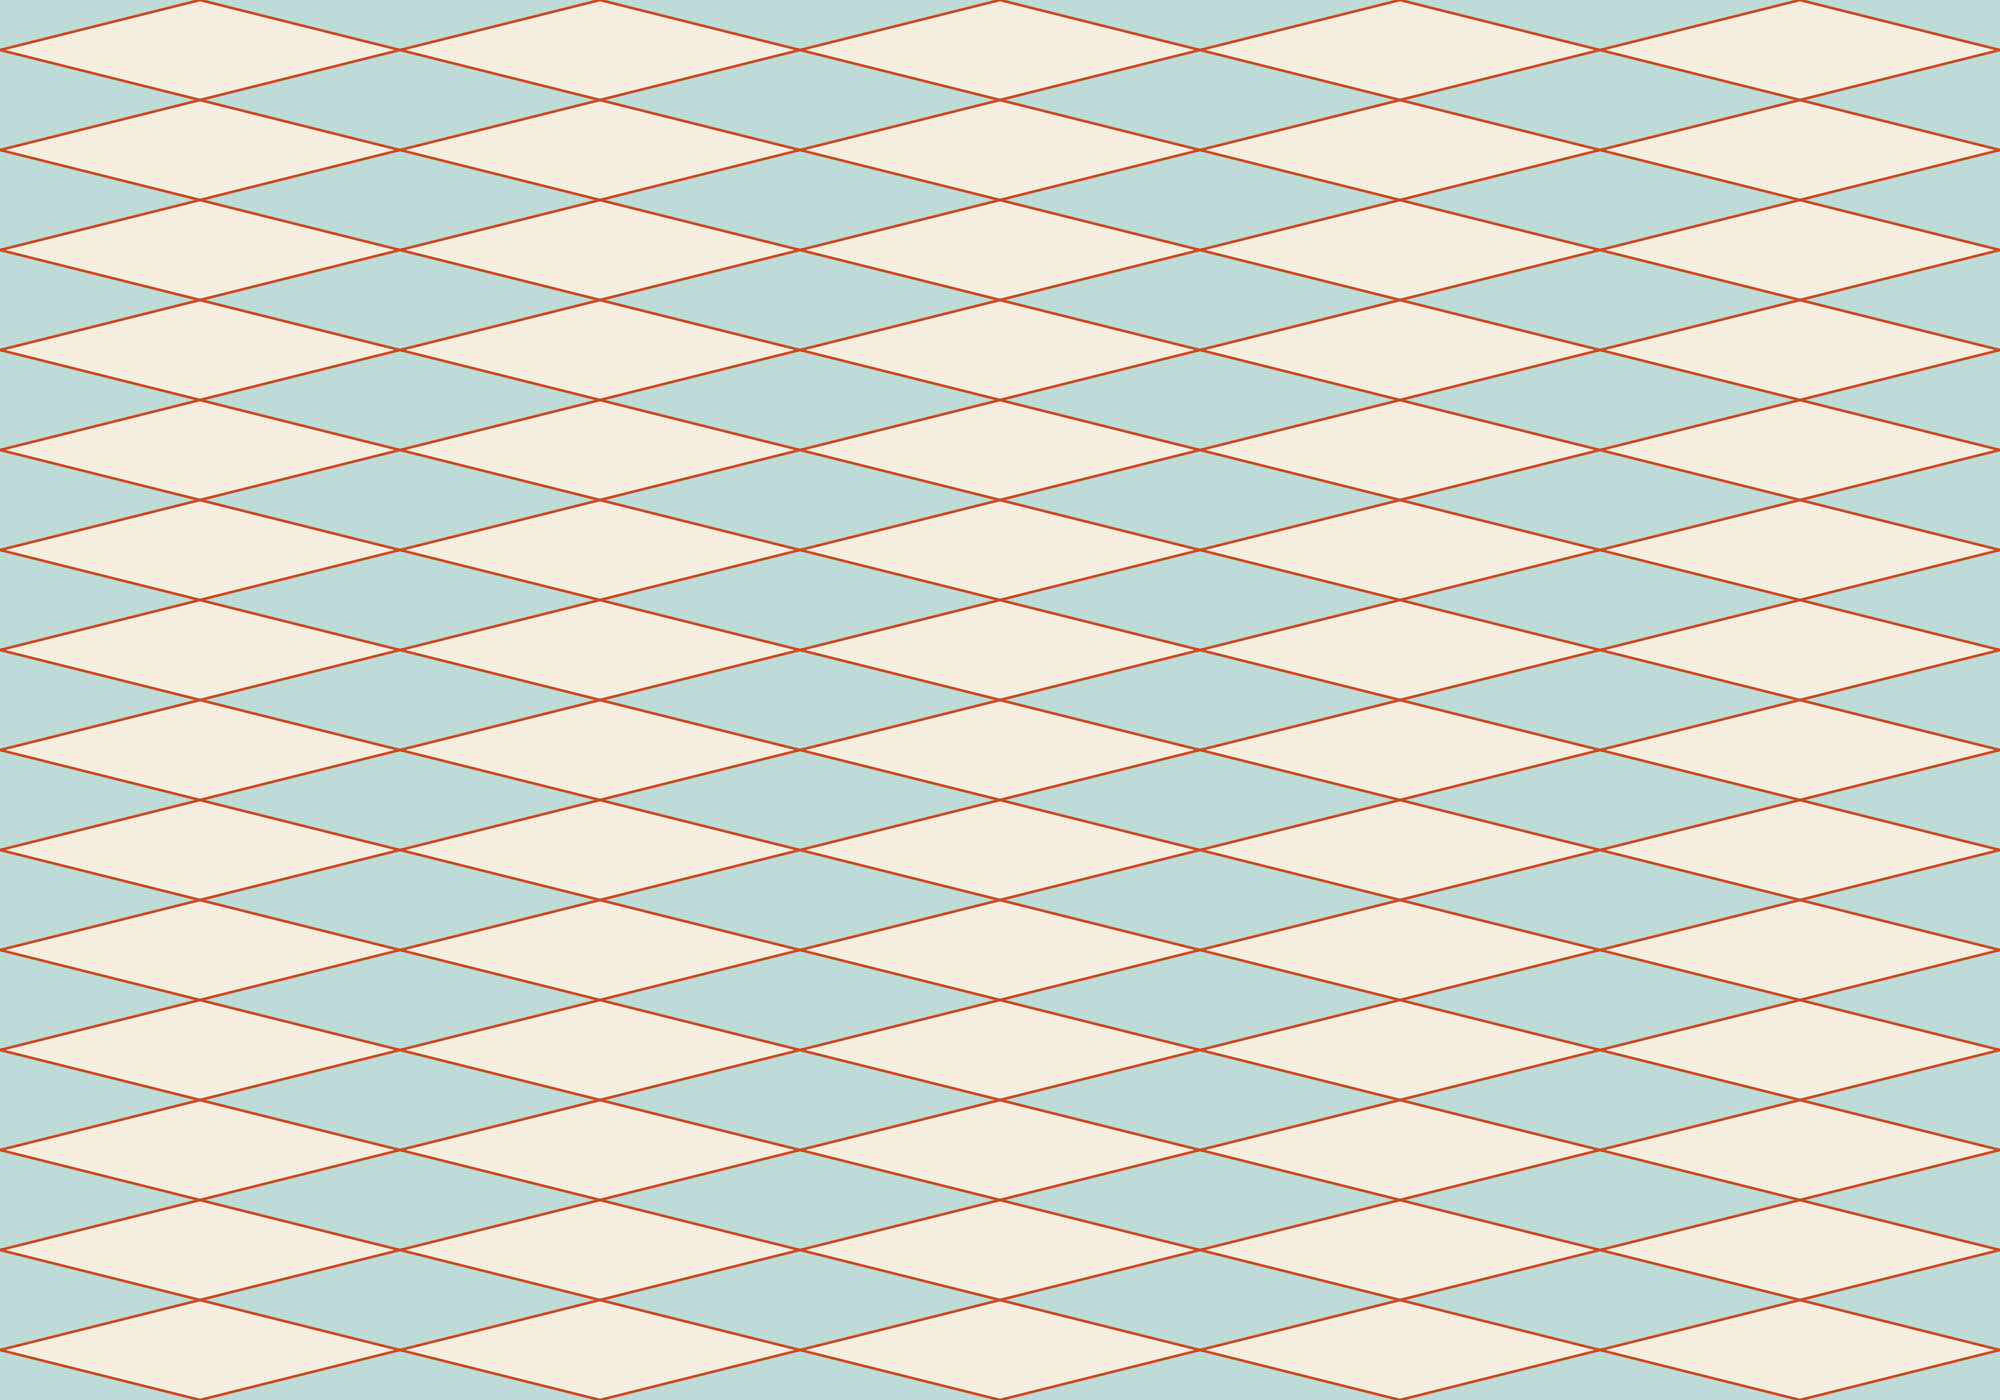             Retro behang met grafisch ruitpatroon - crème, turquoise, oranje | Premium glad vlies
        